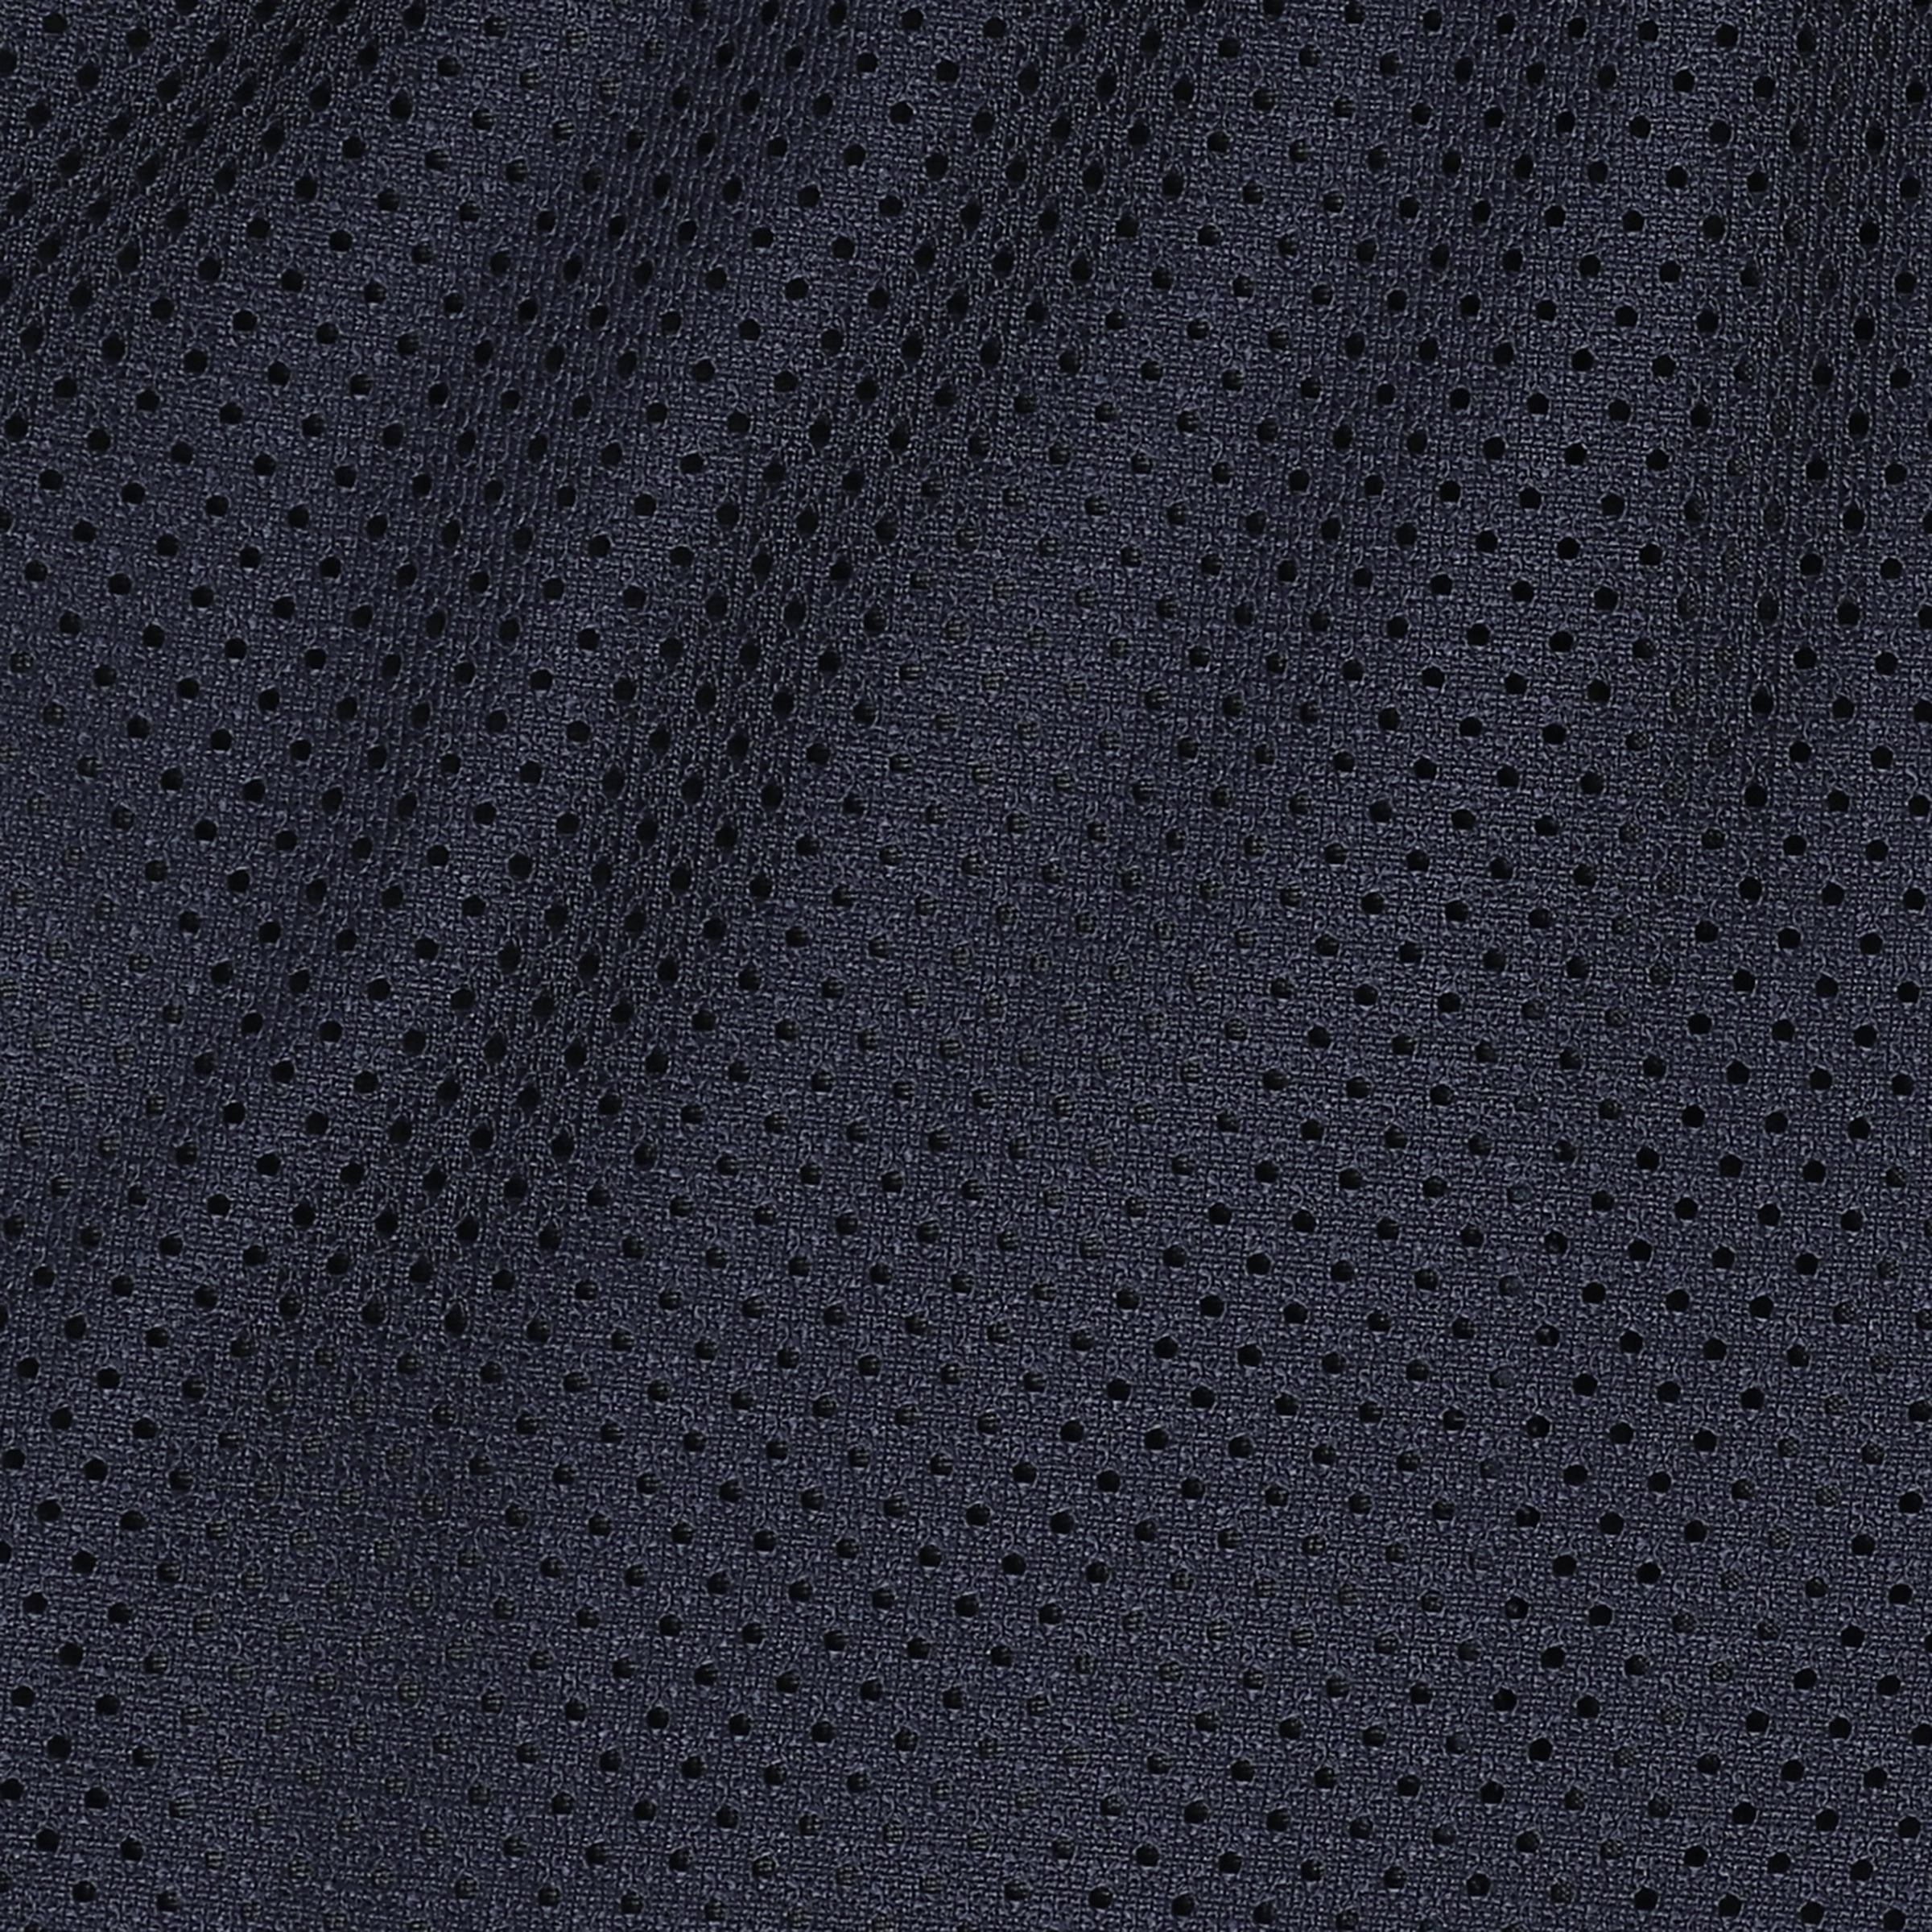 Mesh Short 5.5" Navy close up mesh fabric